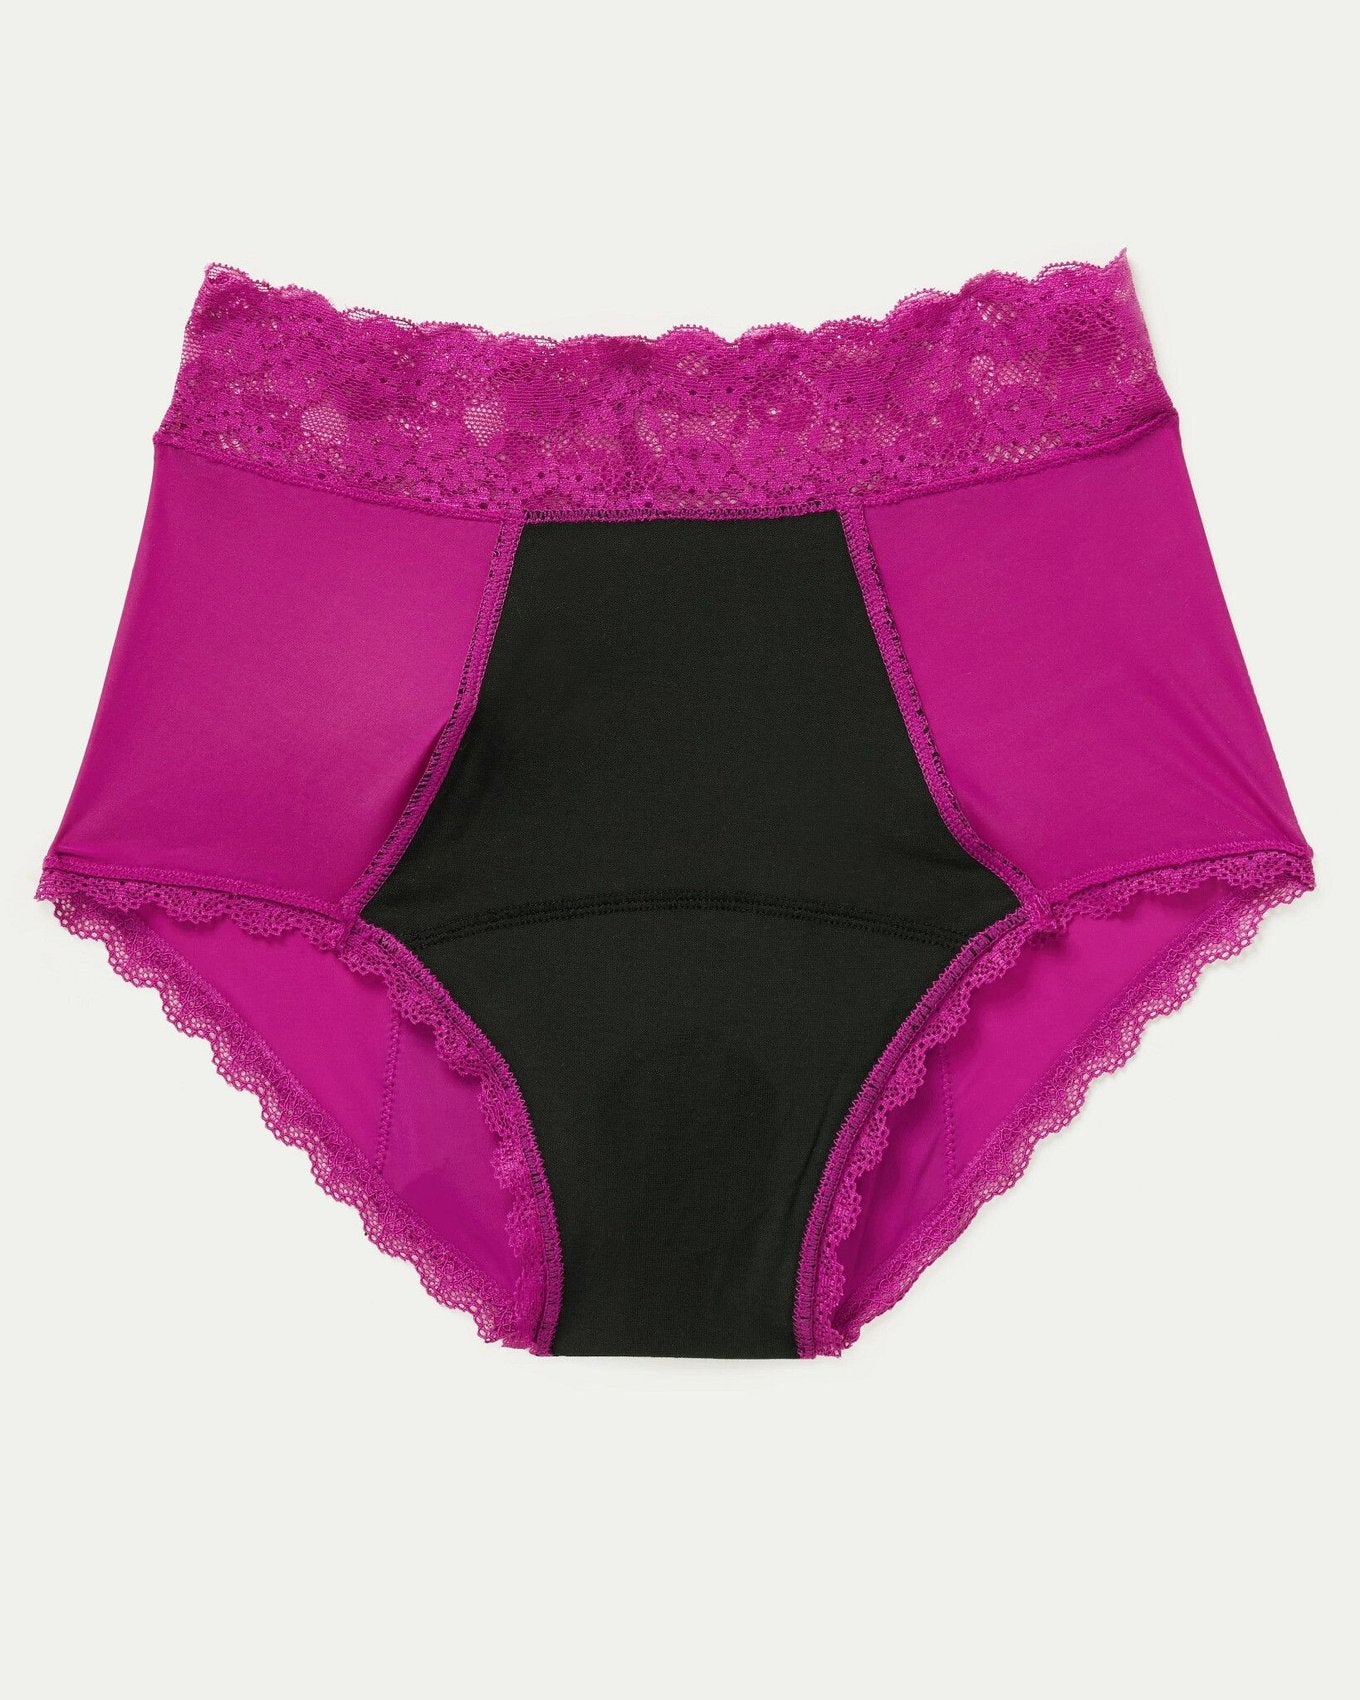 Joyja Amelia period-proof panty in color Festival Fuchsia and shape high waisted